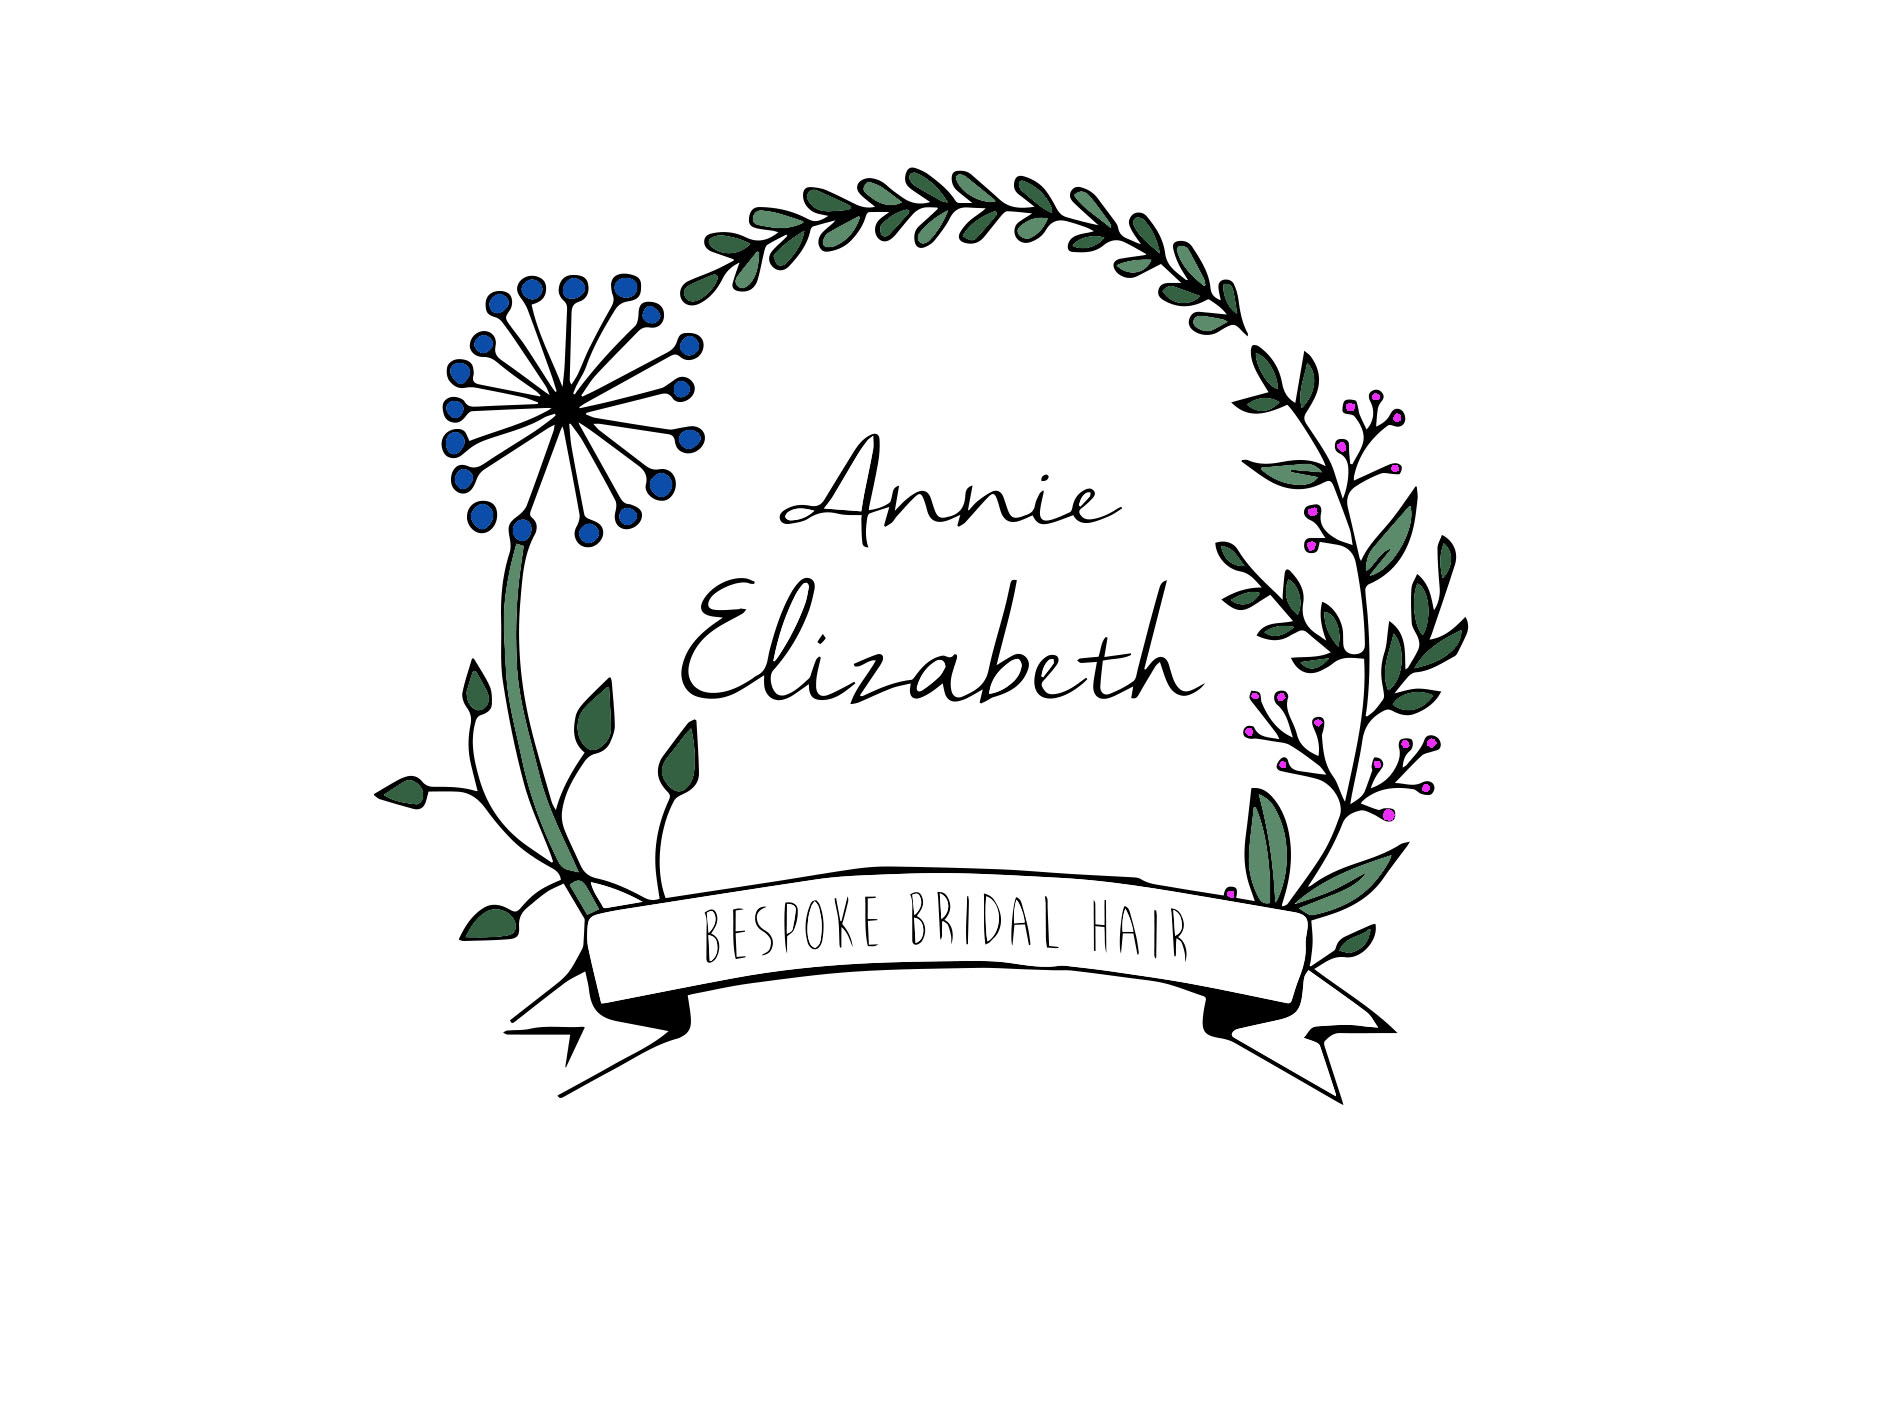 Annie Elizabeth